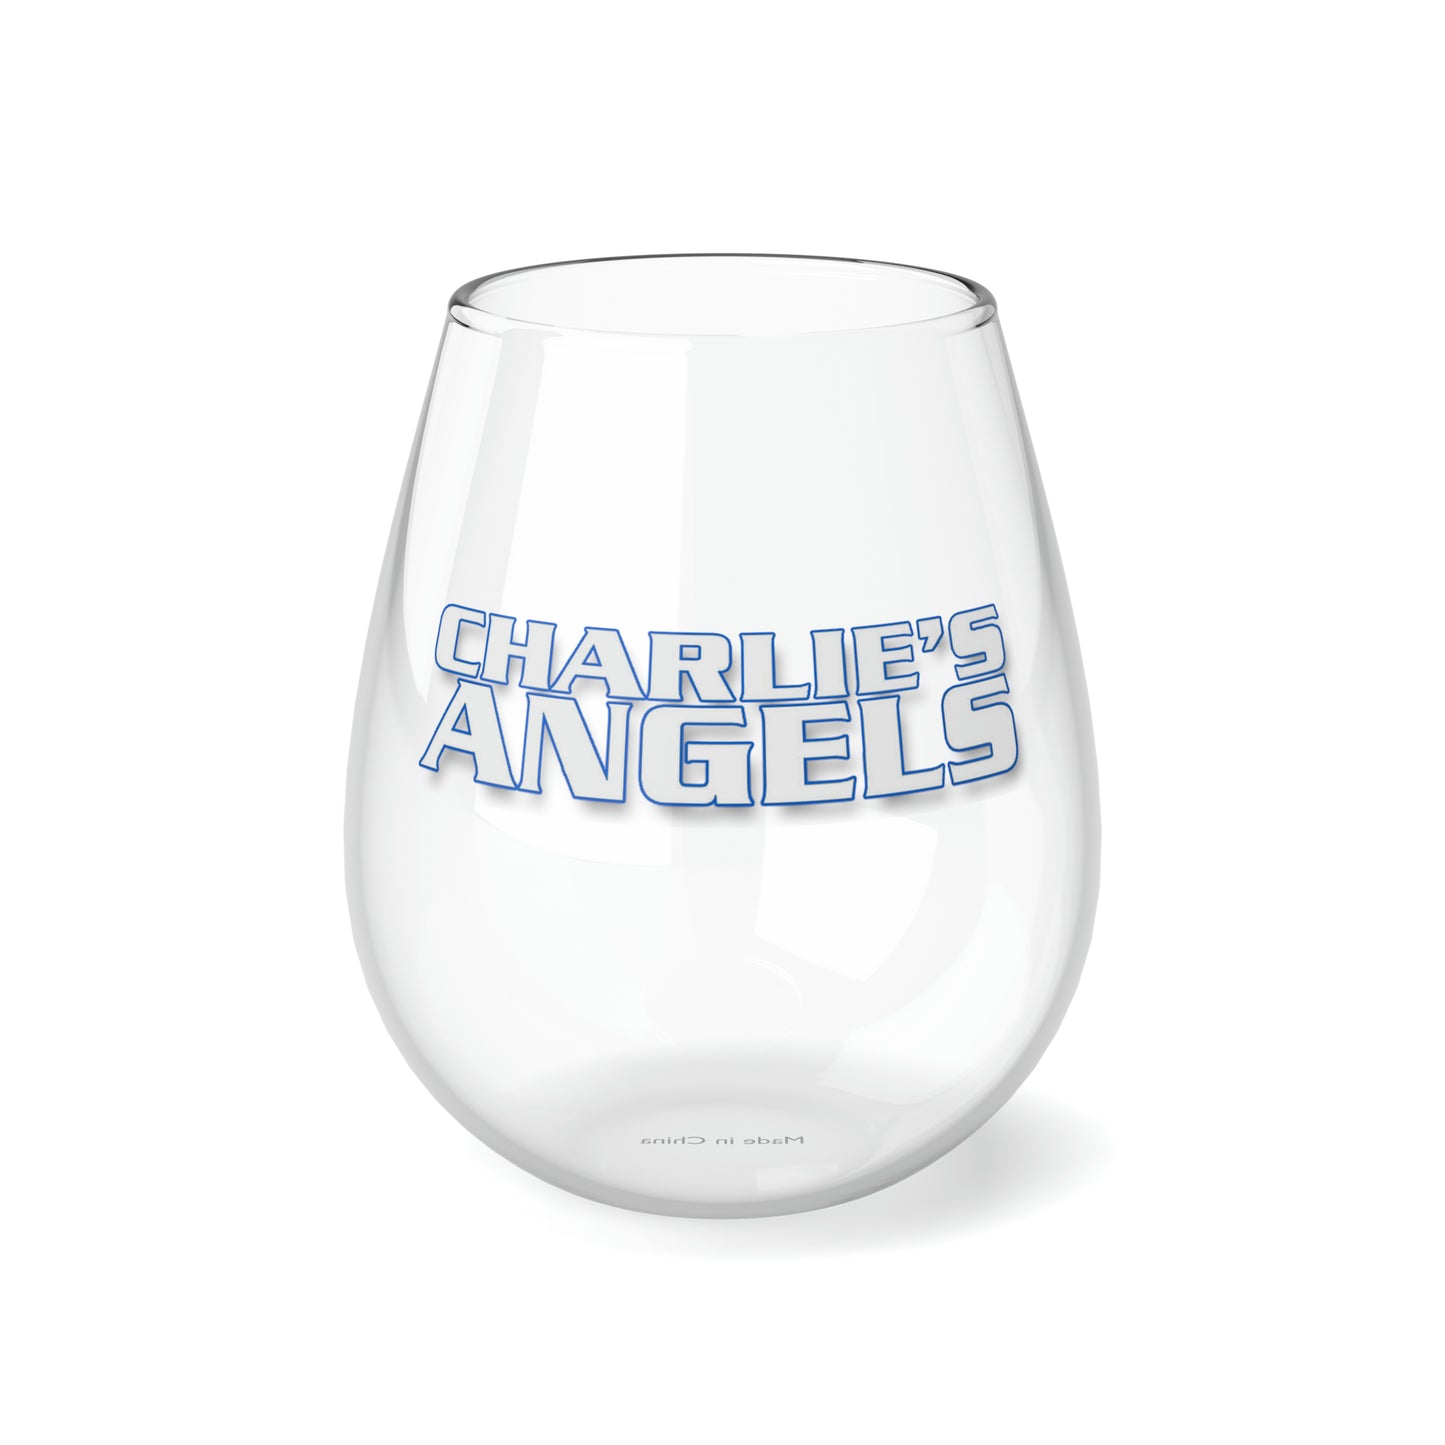 CHARLIES ANGELS TV Show Wine Glass 12oz